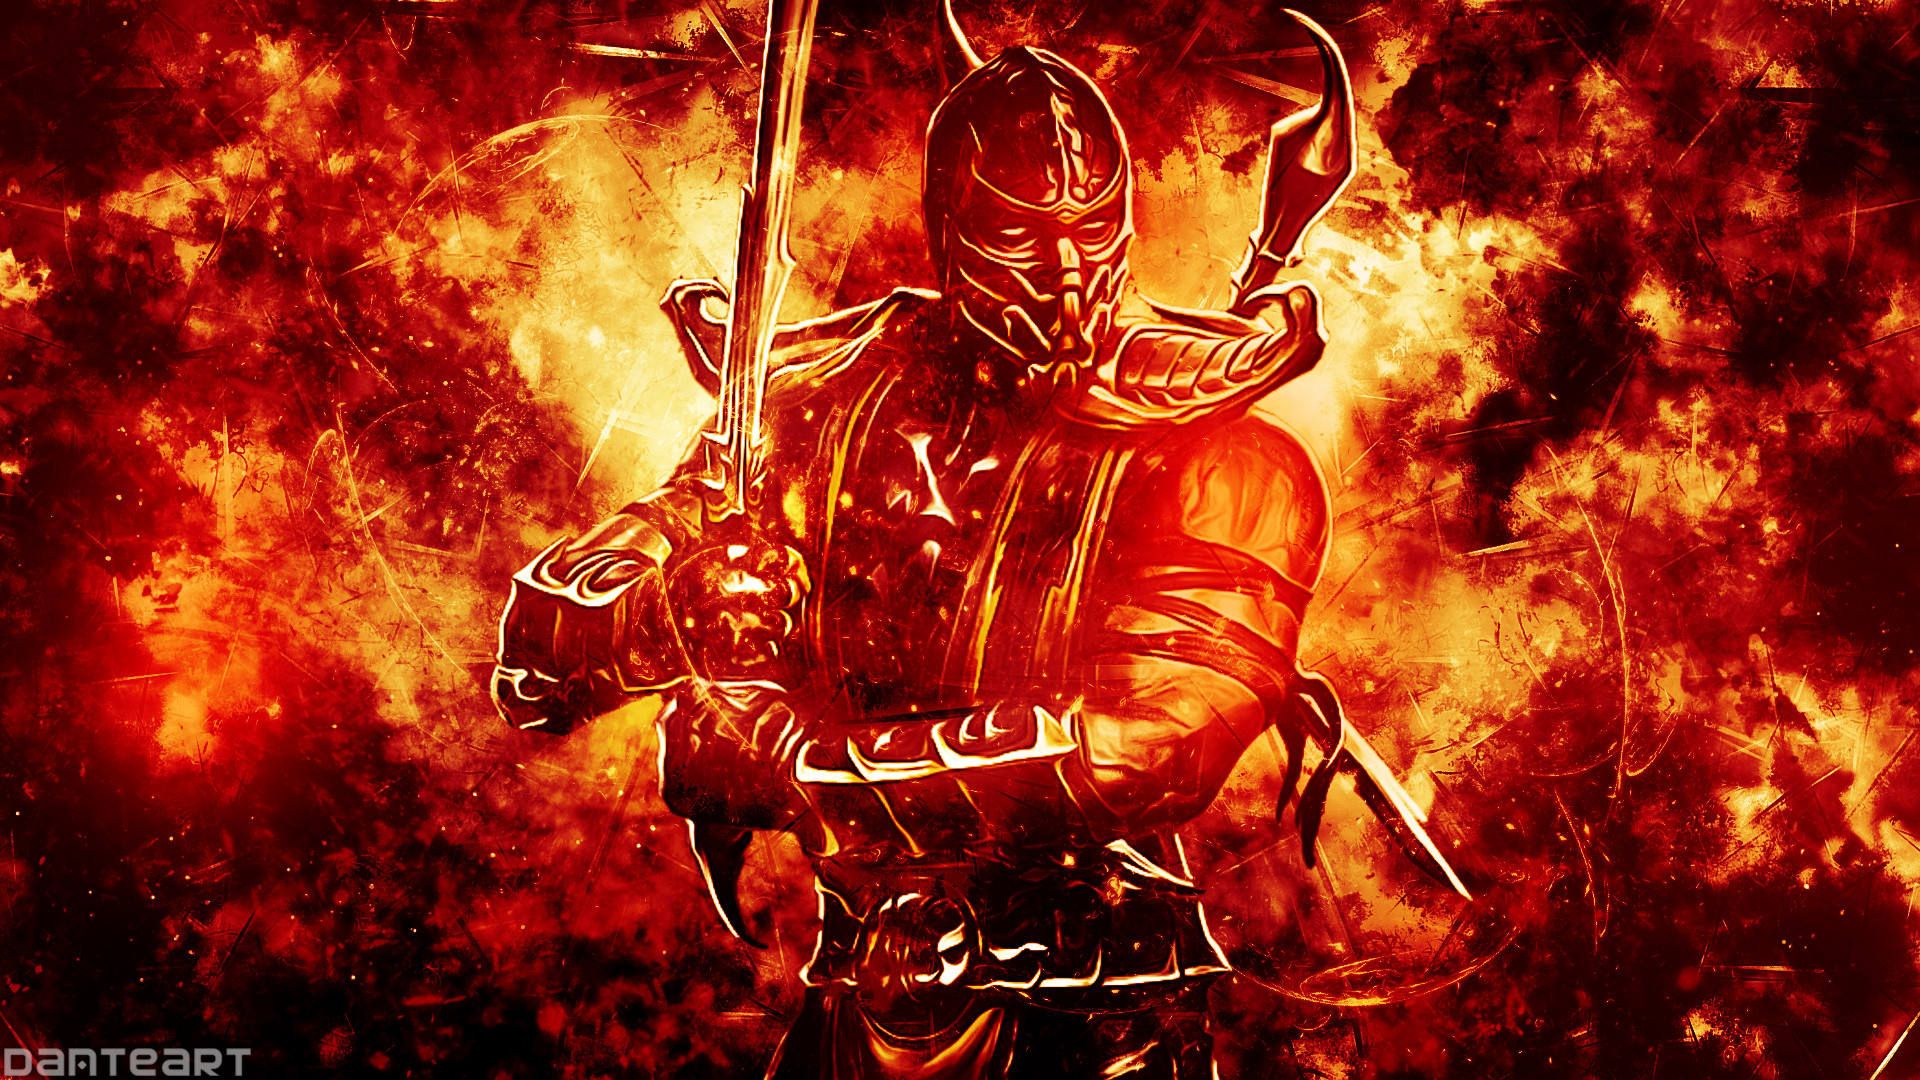 Mortal Kombat Wallpapers Scorpion 65 Images HD Wallpapers Download Free Images Wallpaper [wallpaper981.blogspot.com]